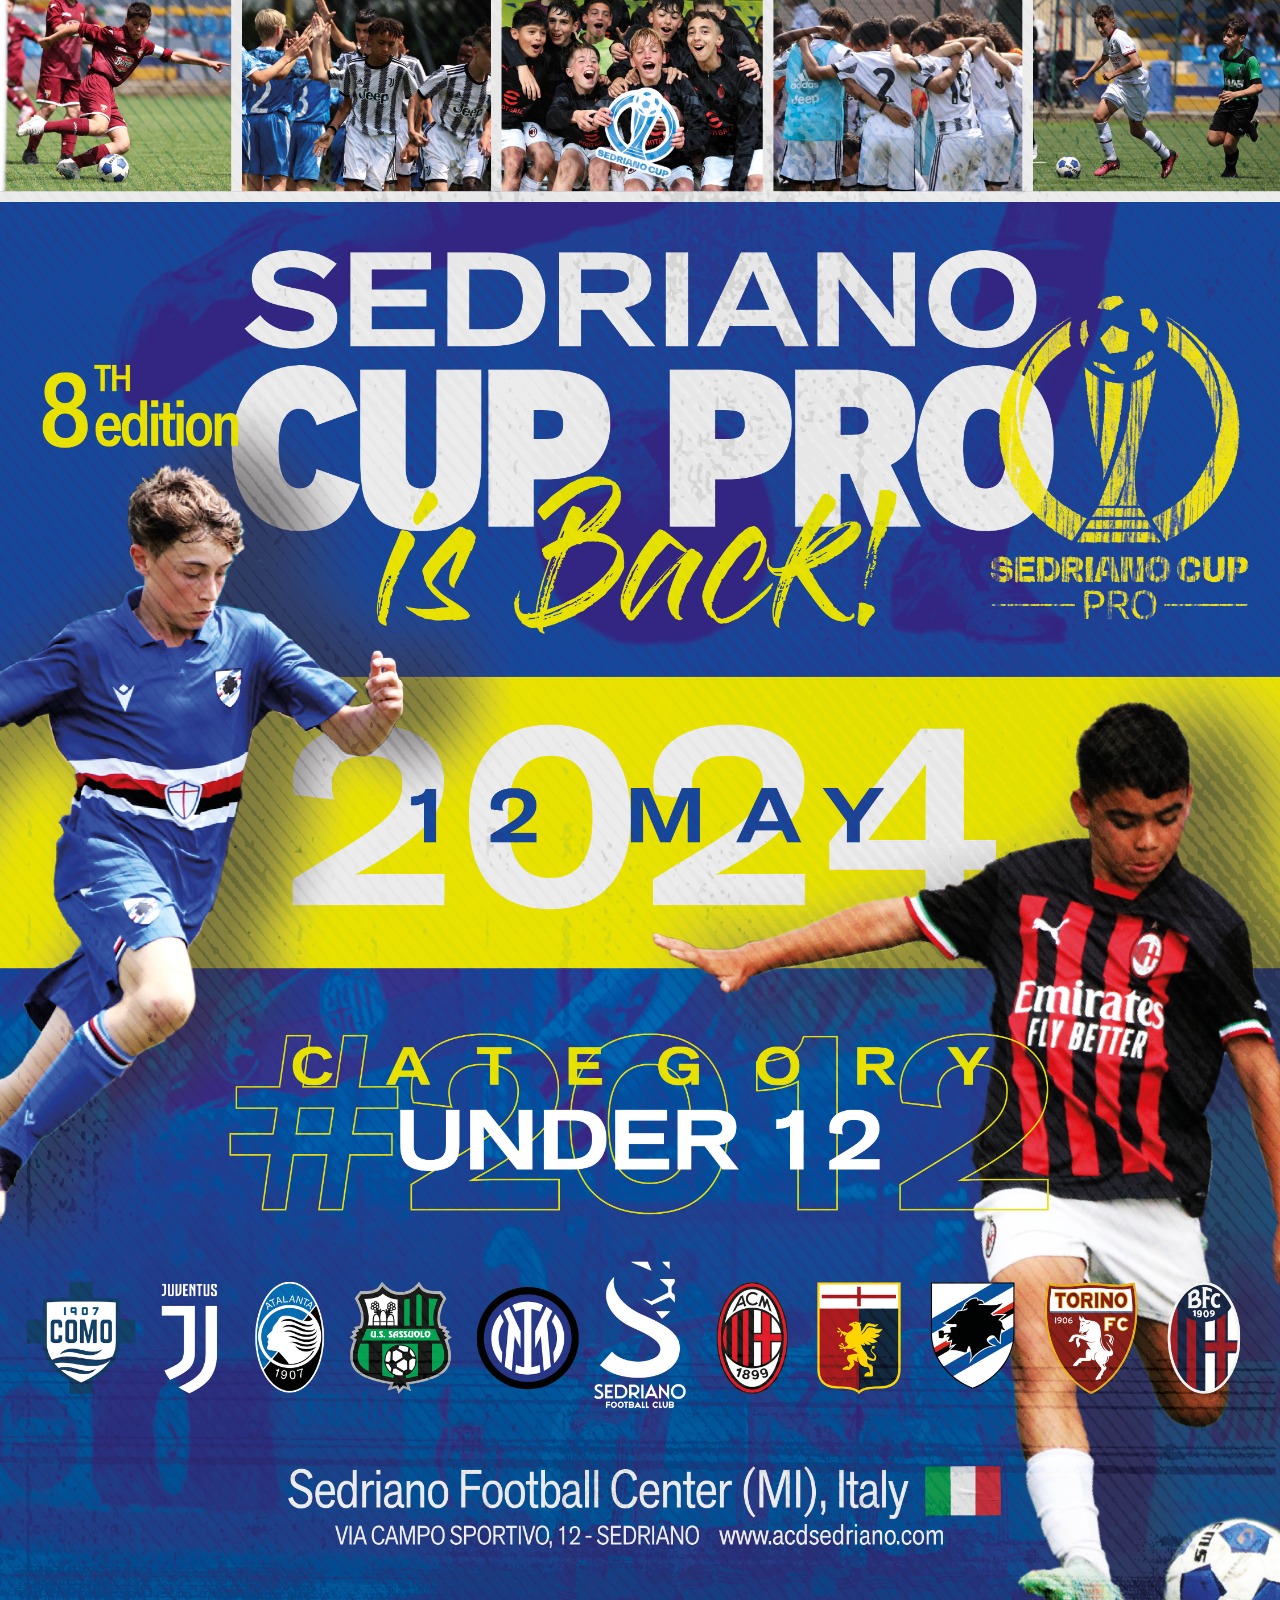 Sedriano Cup Pro 24